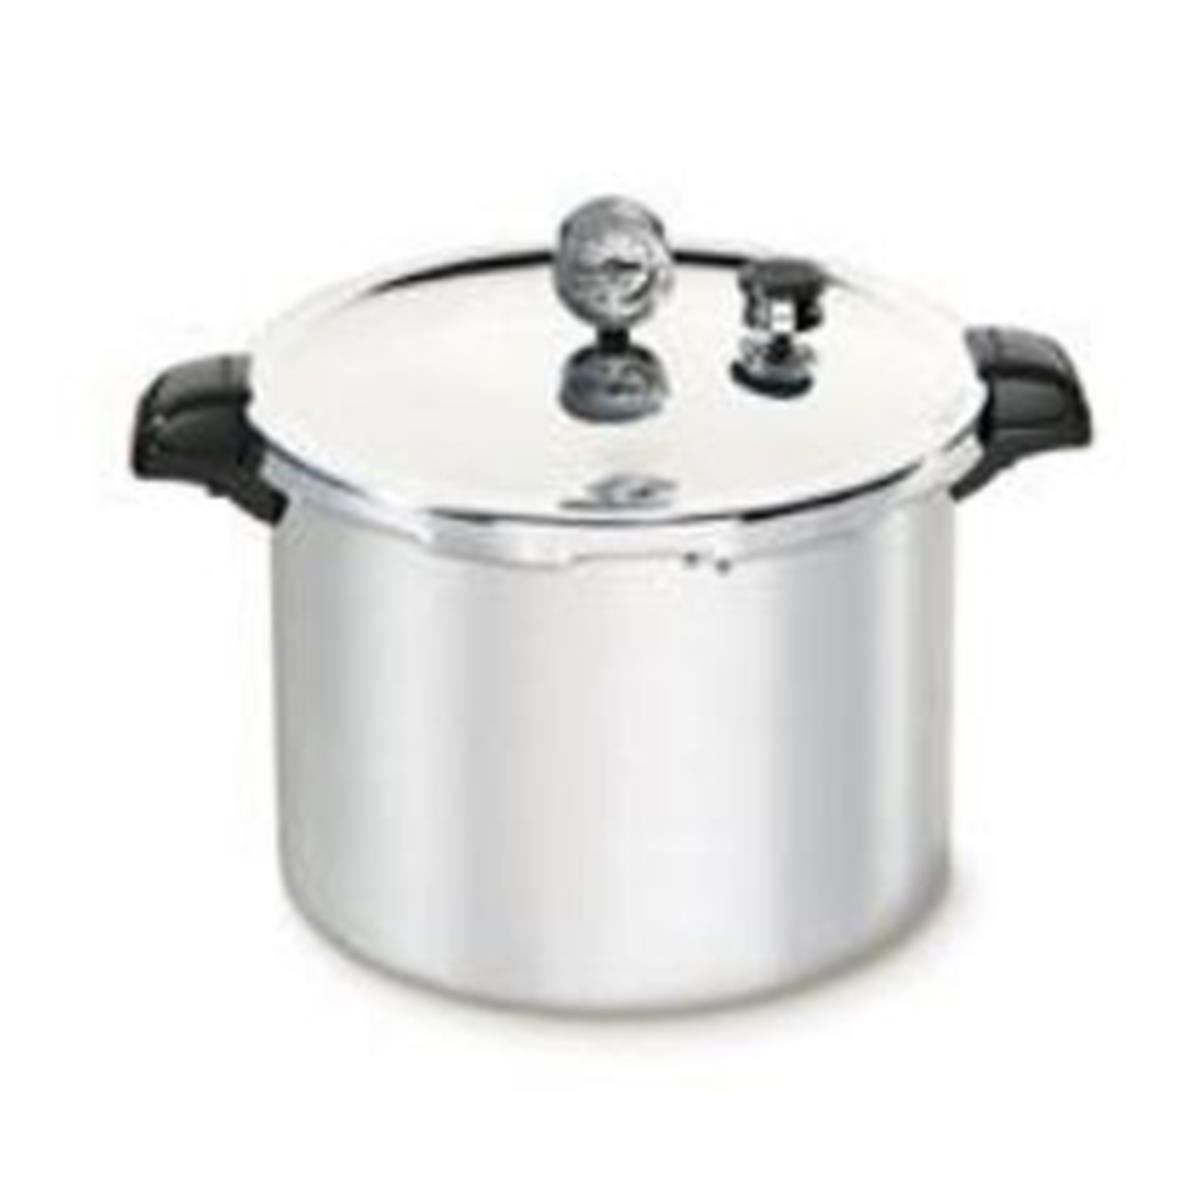 Presto 01755 16-quart Aluminum Pressure Canner & Cooker In Gray